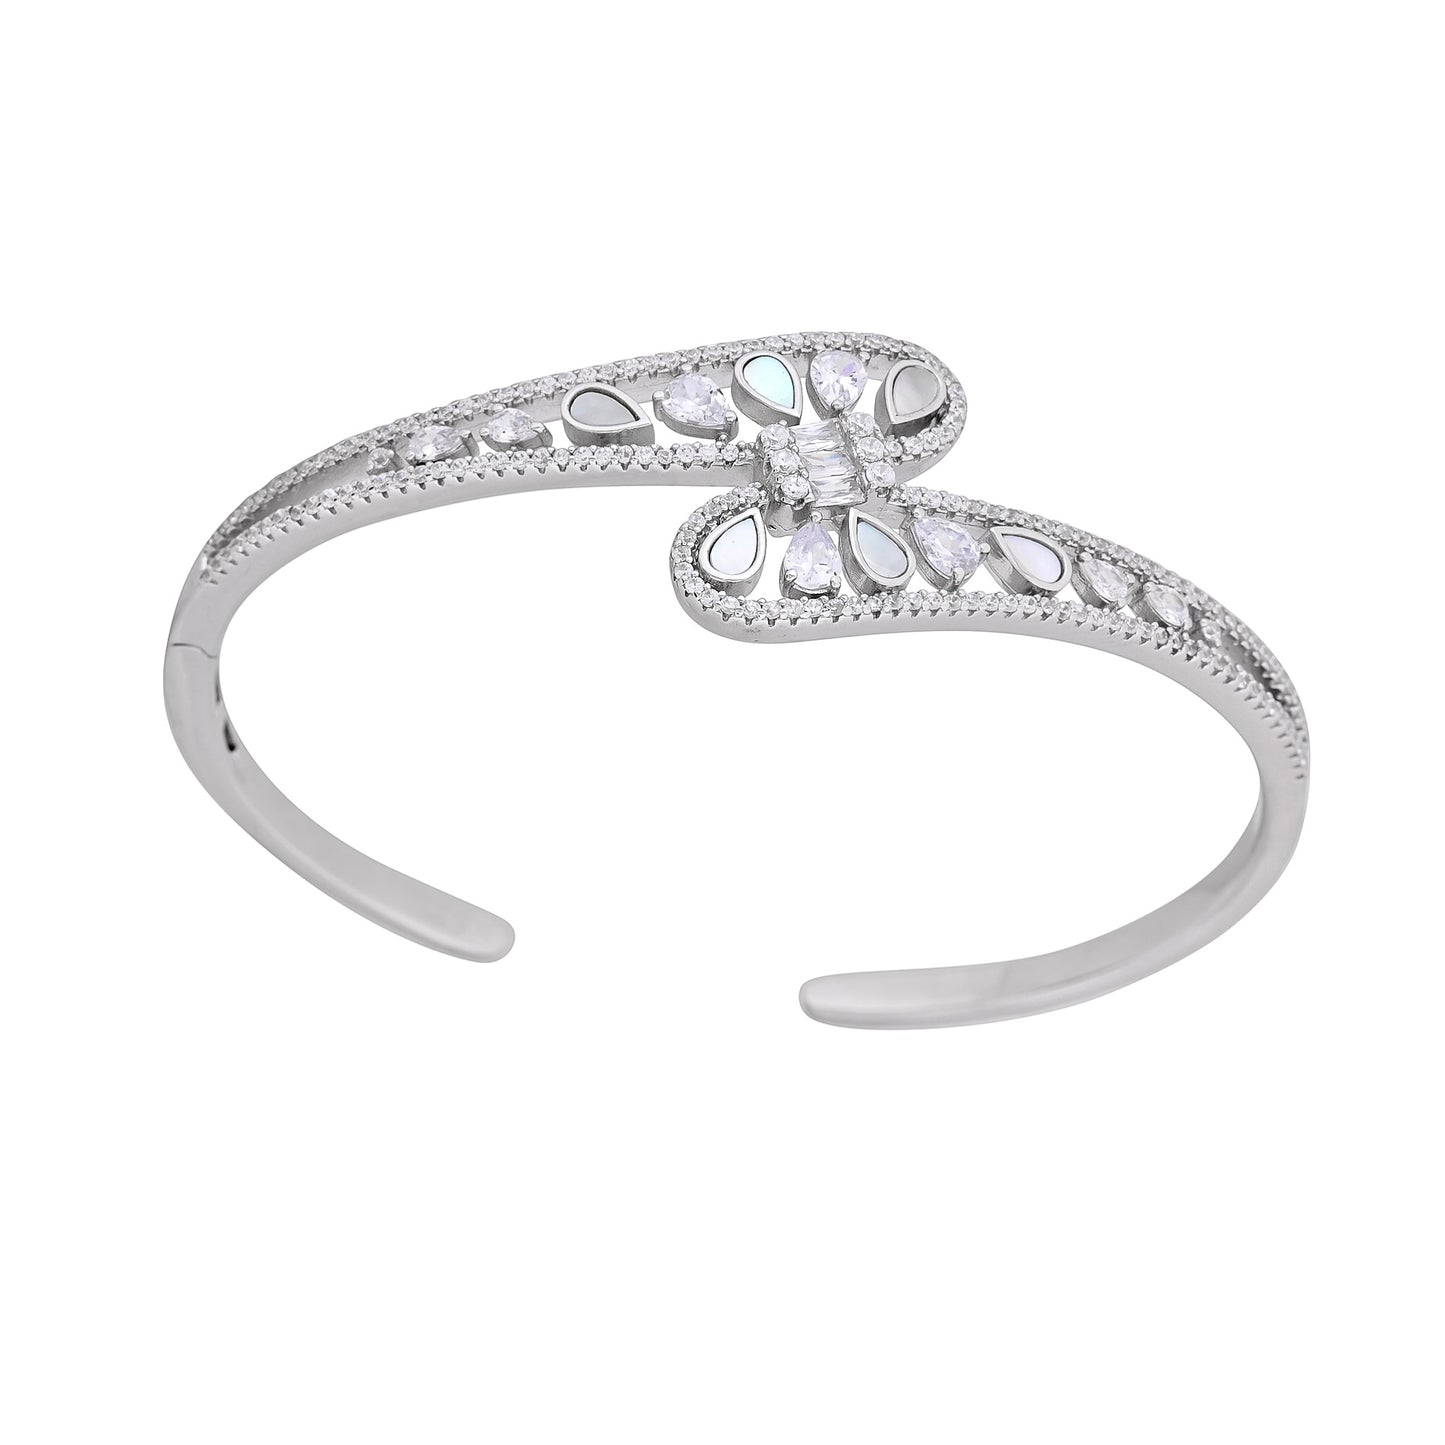 Silver Charming Adjustable Kada with Ring